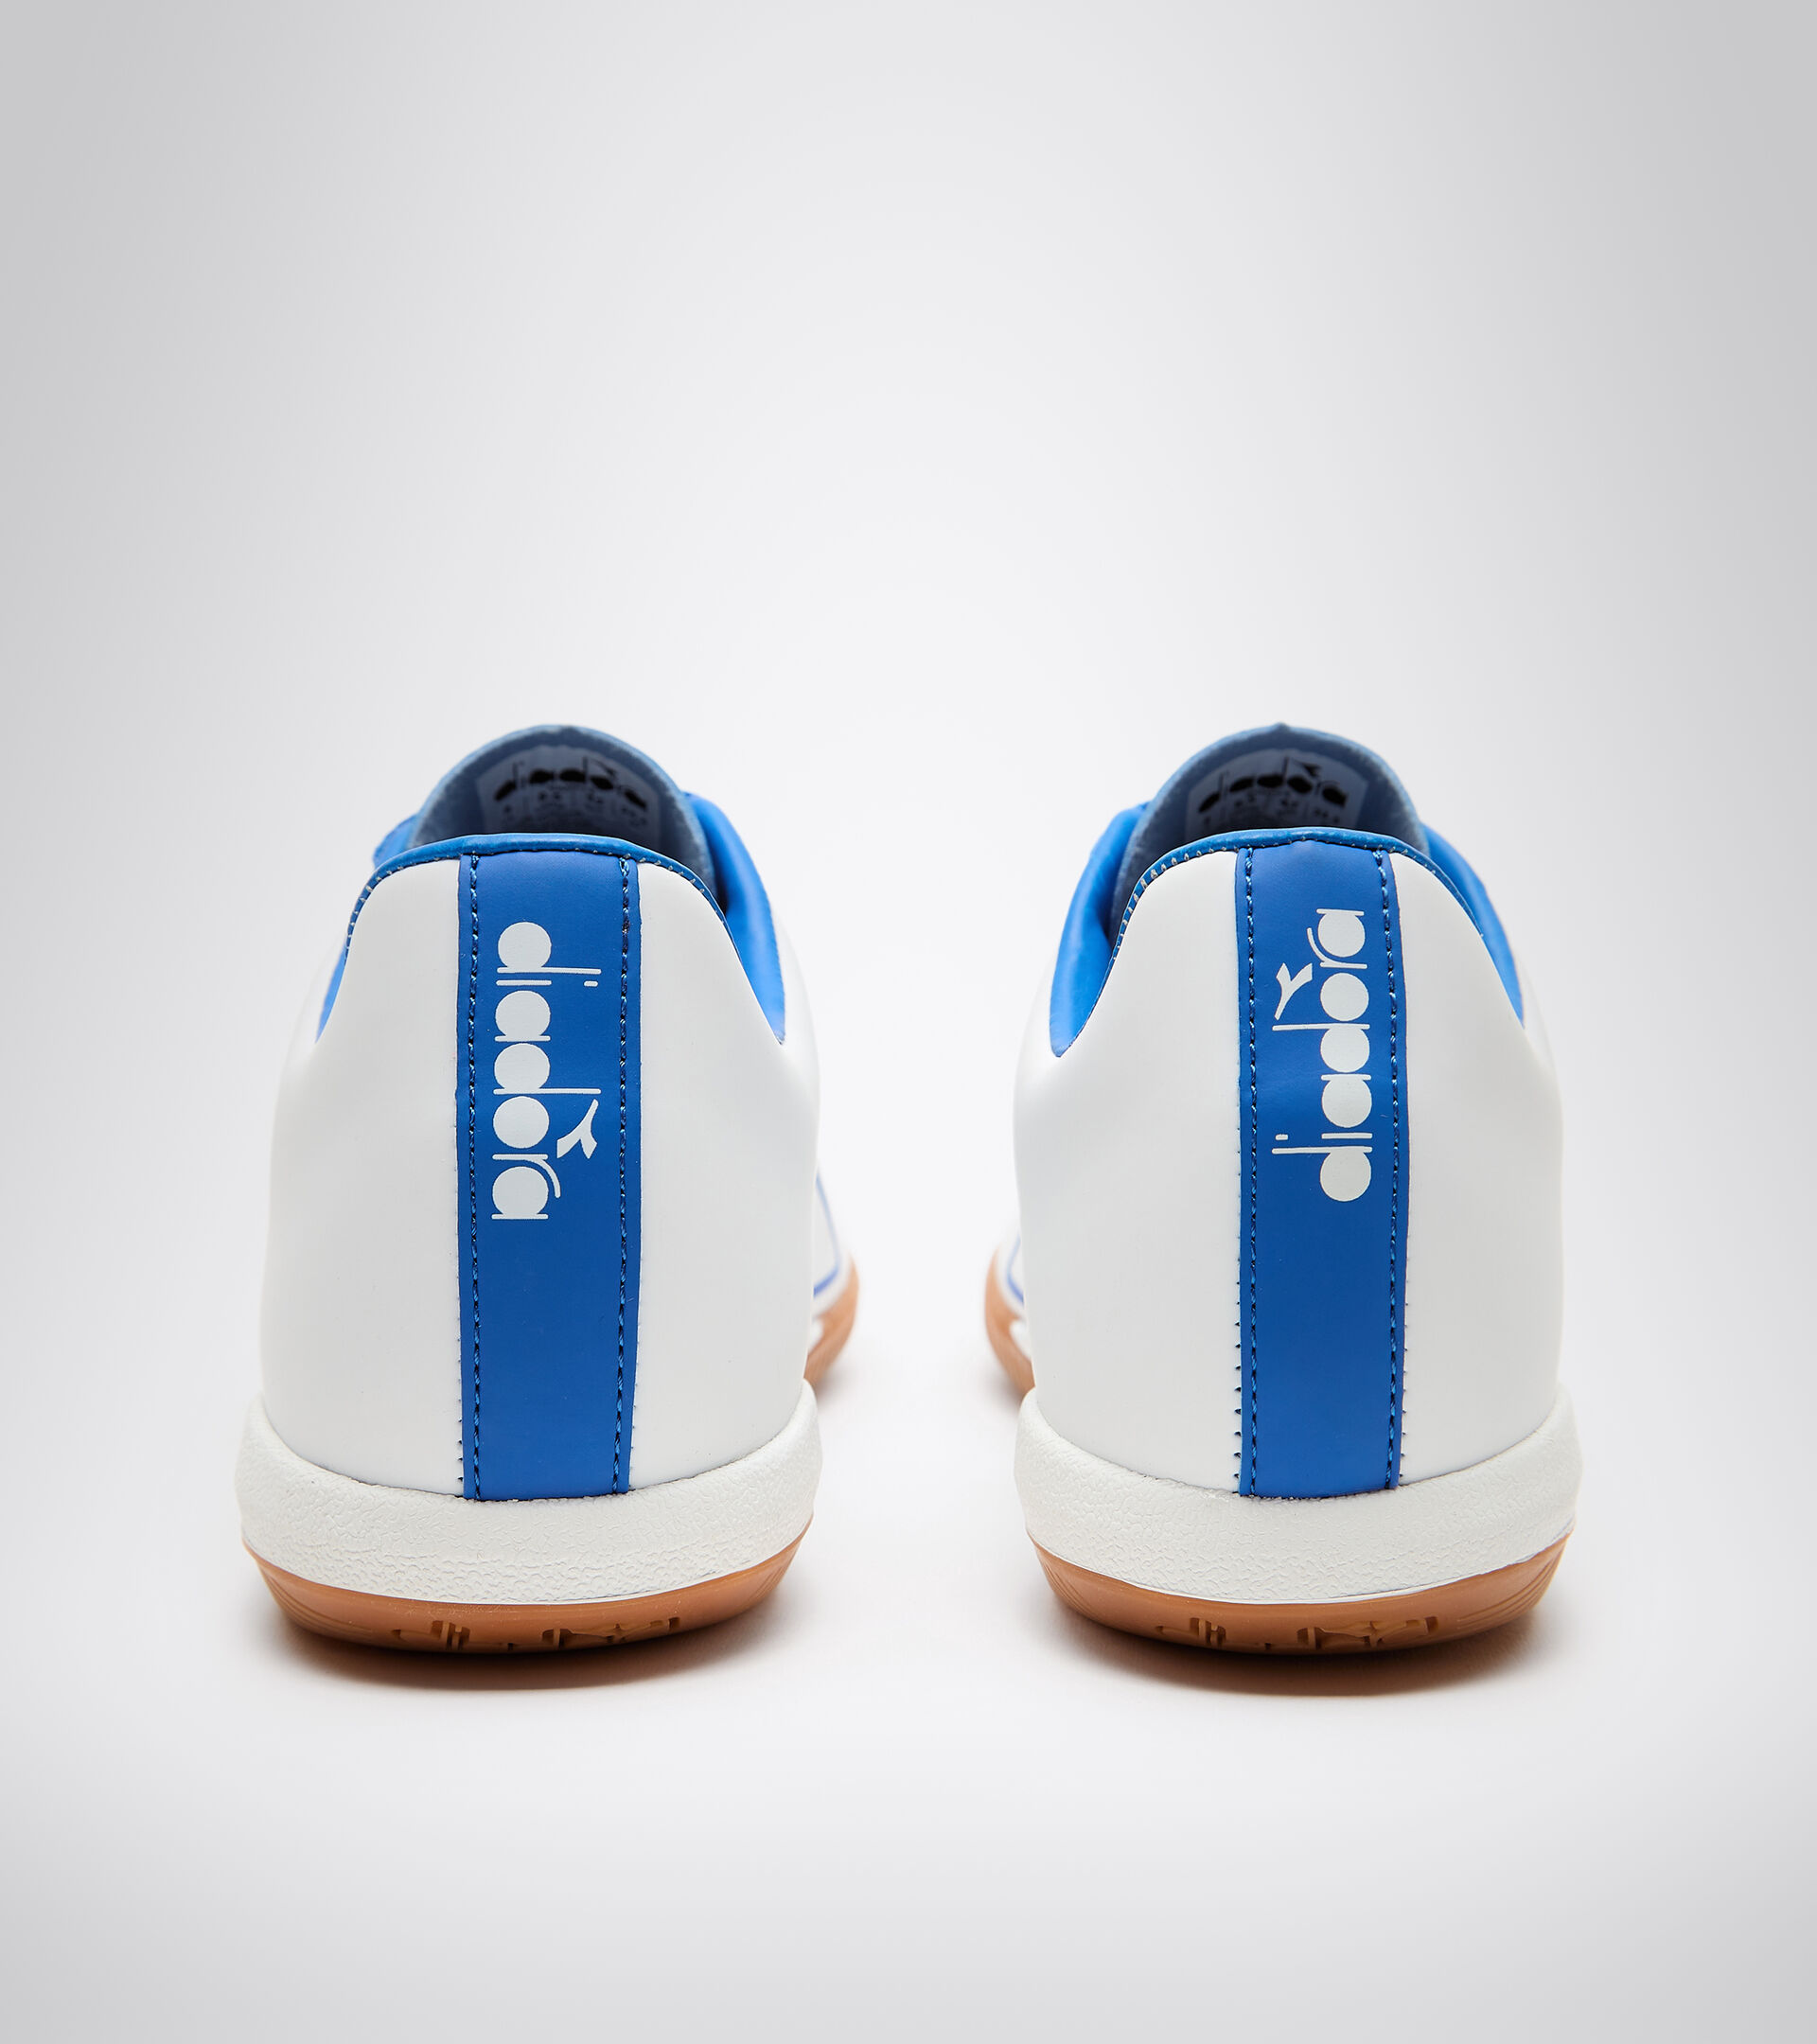 Indoor and parquet court futsal boots PICHICHI 4 IDR WHITE/ROYAL BLUE - Diadora